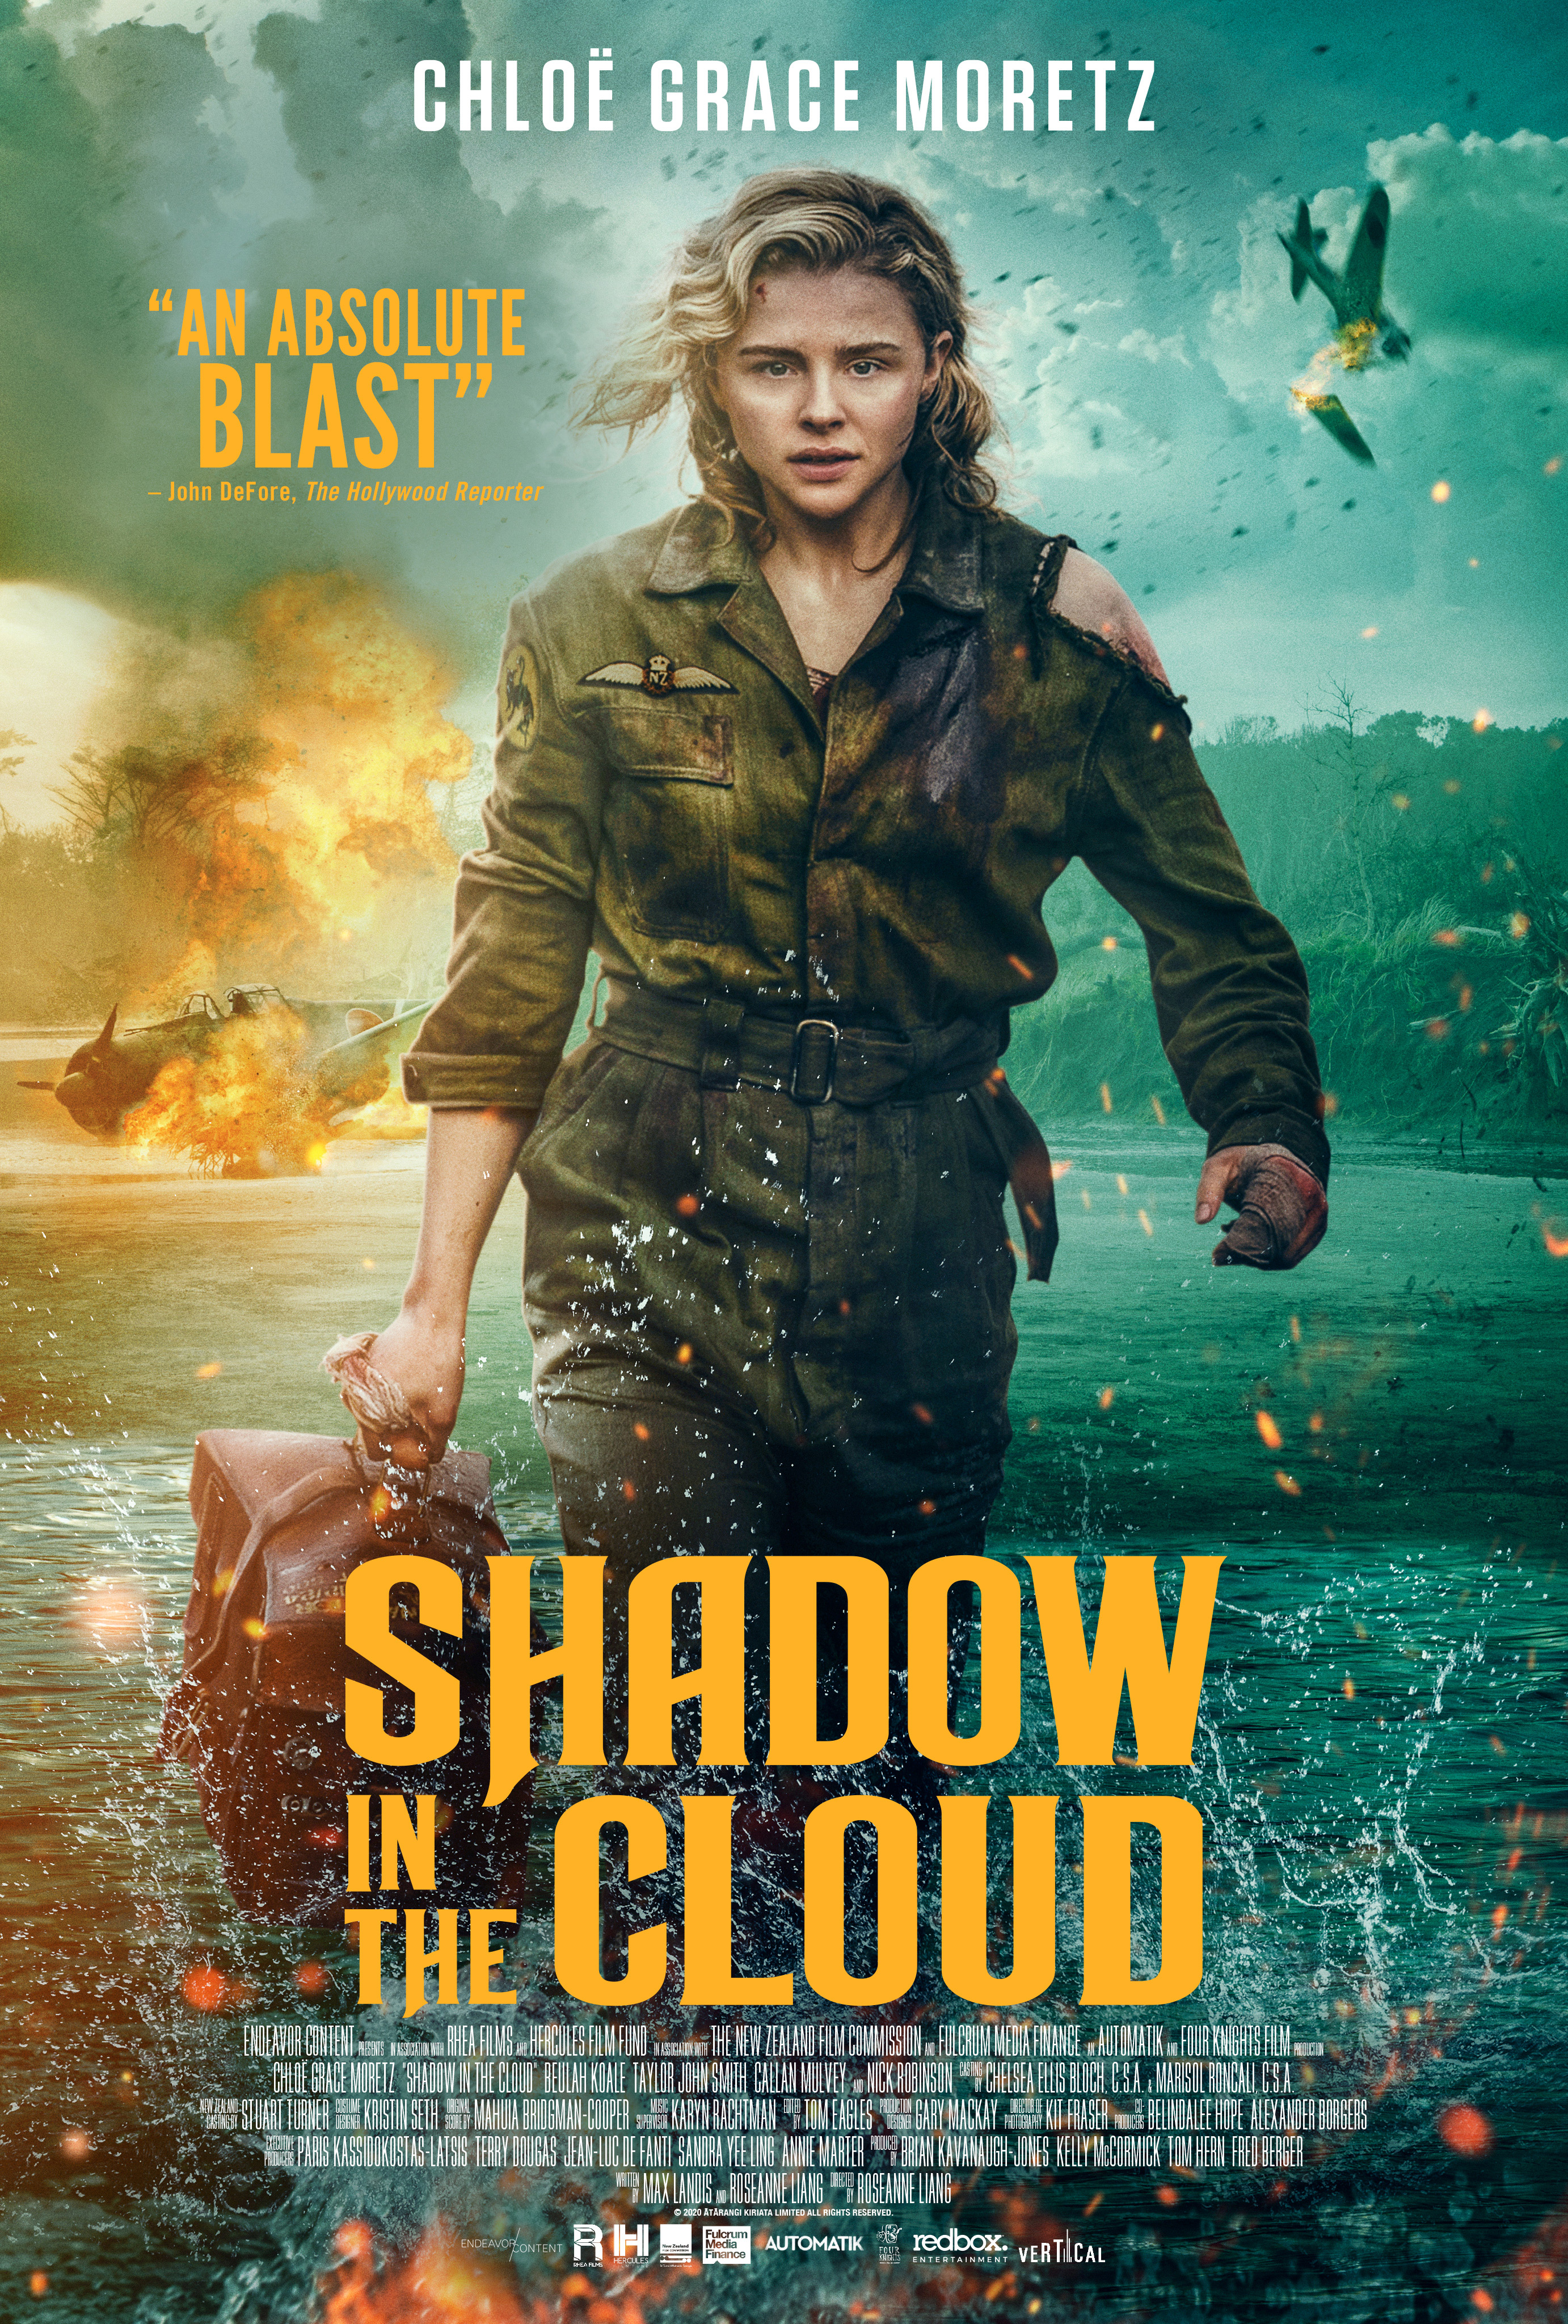 Nonton film Shadow in the Cloud layarkaca21 indoxx1 ganool online streaming terbaru